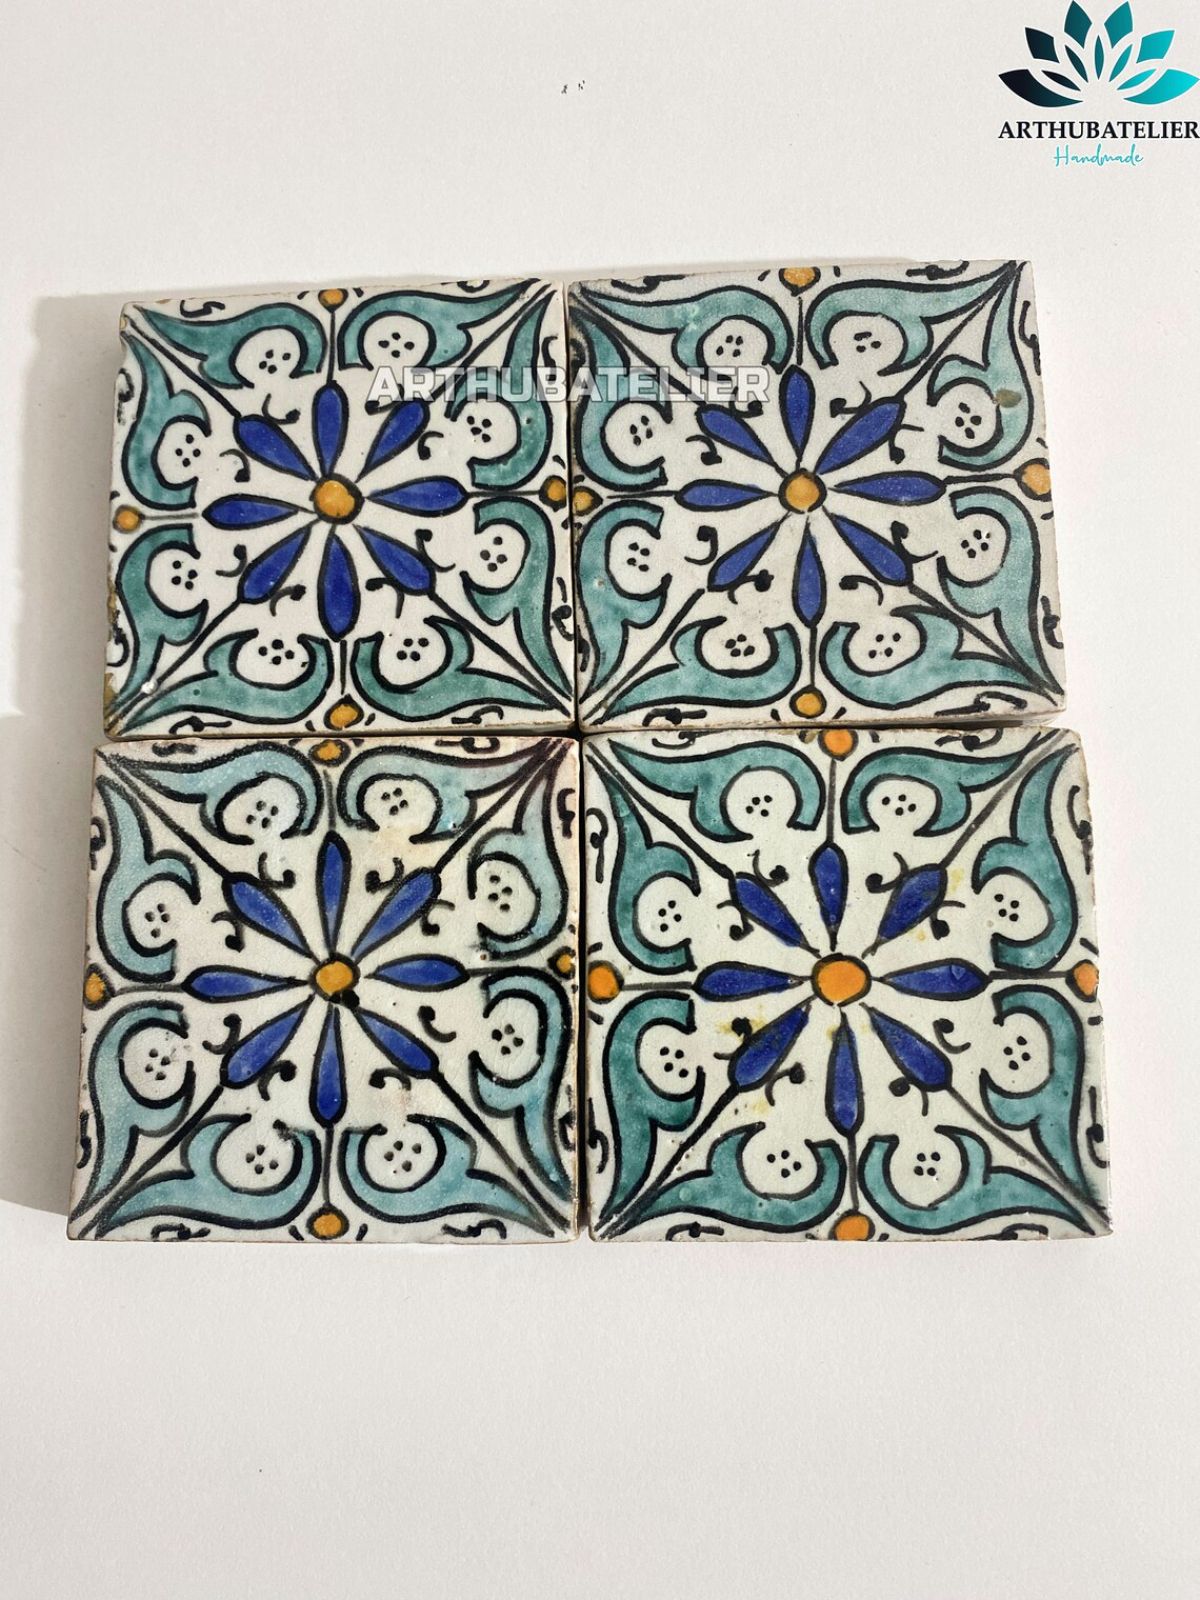 Hand-Painted Ceramic tiles